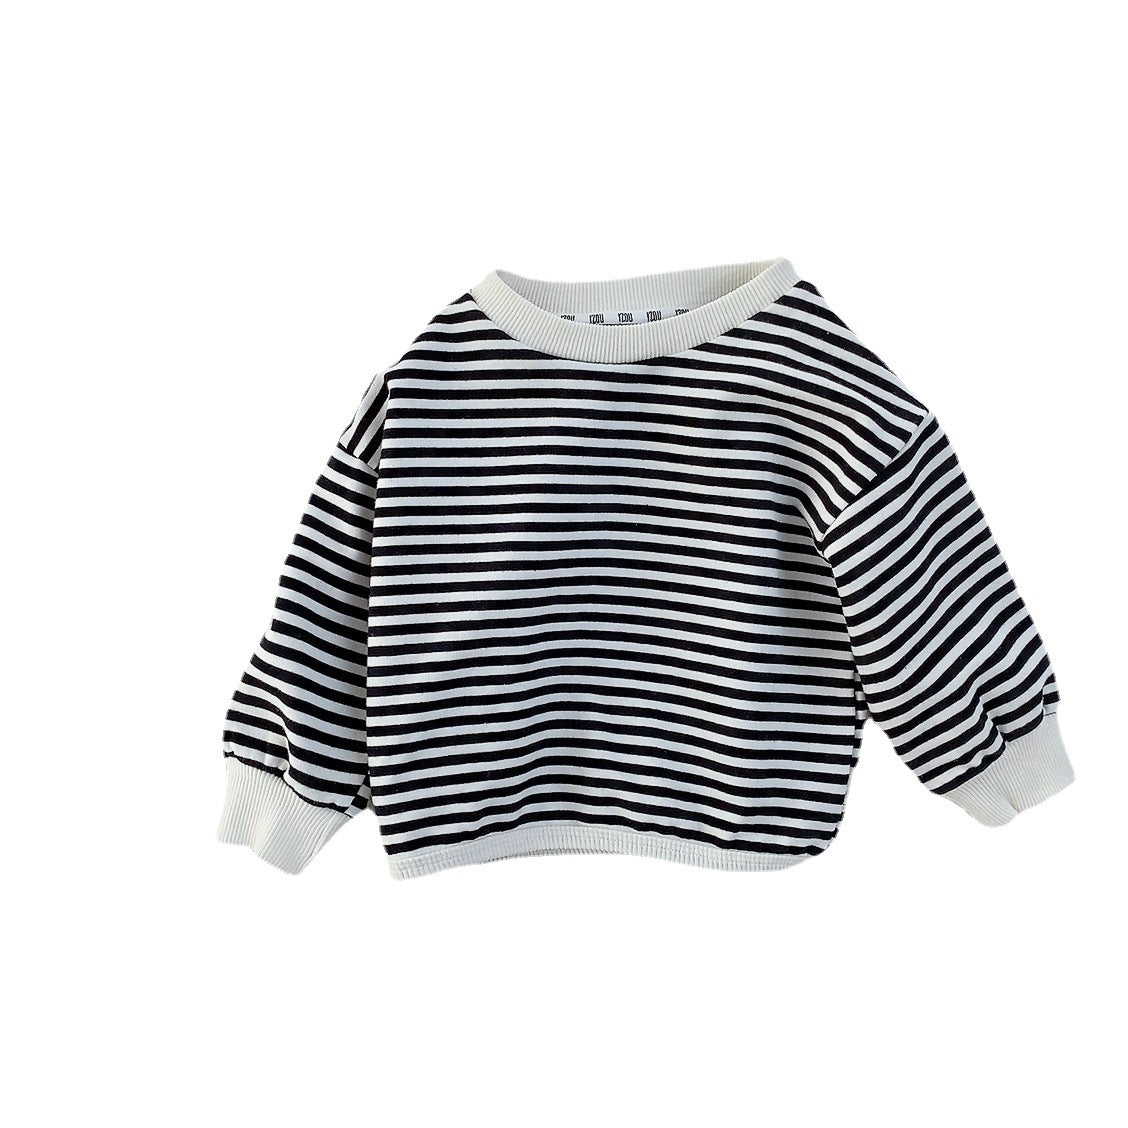 Children's New Striped Pullover Tops